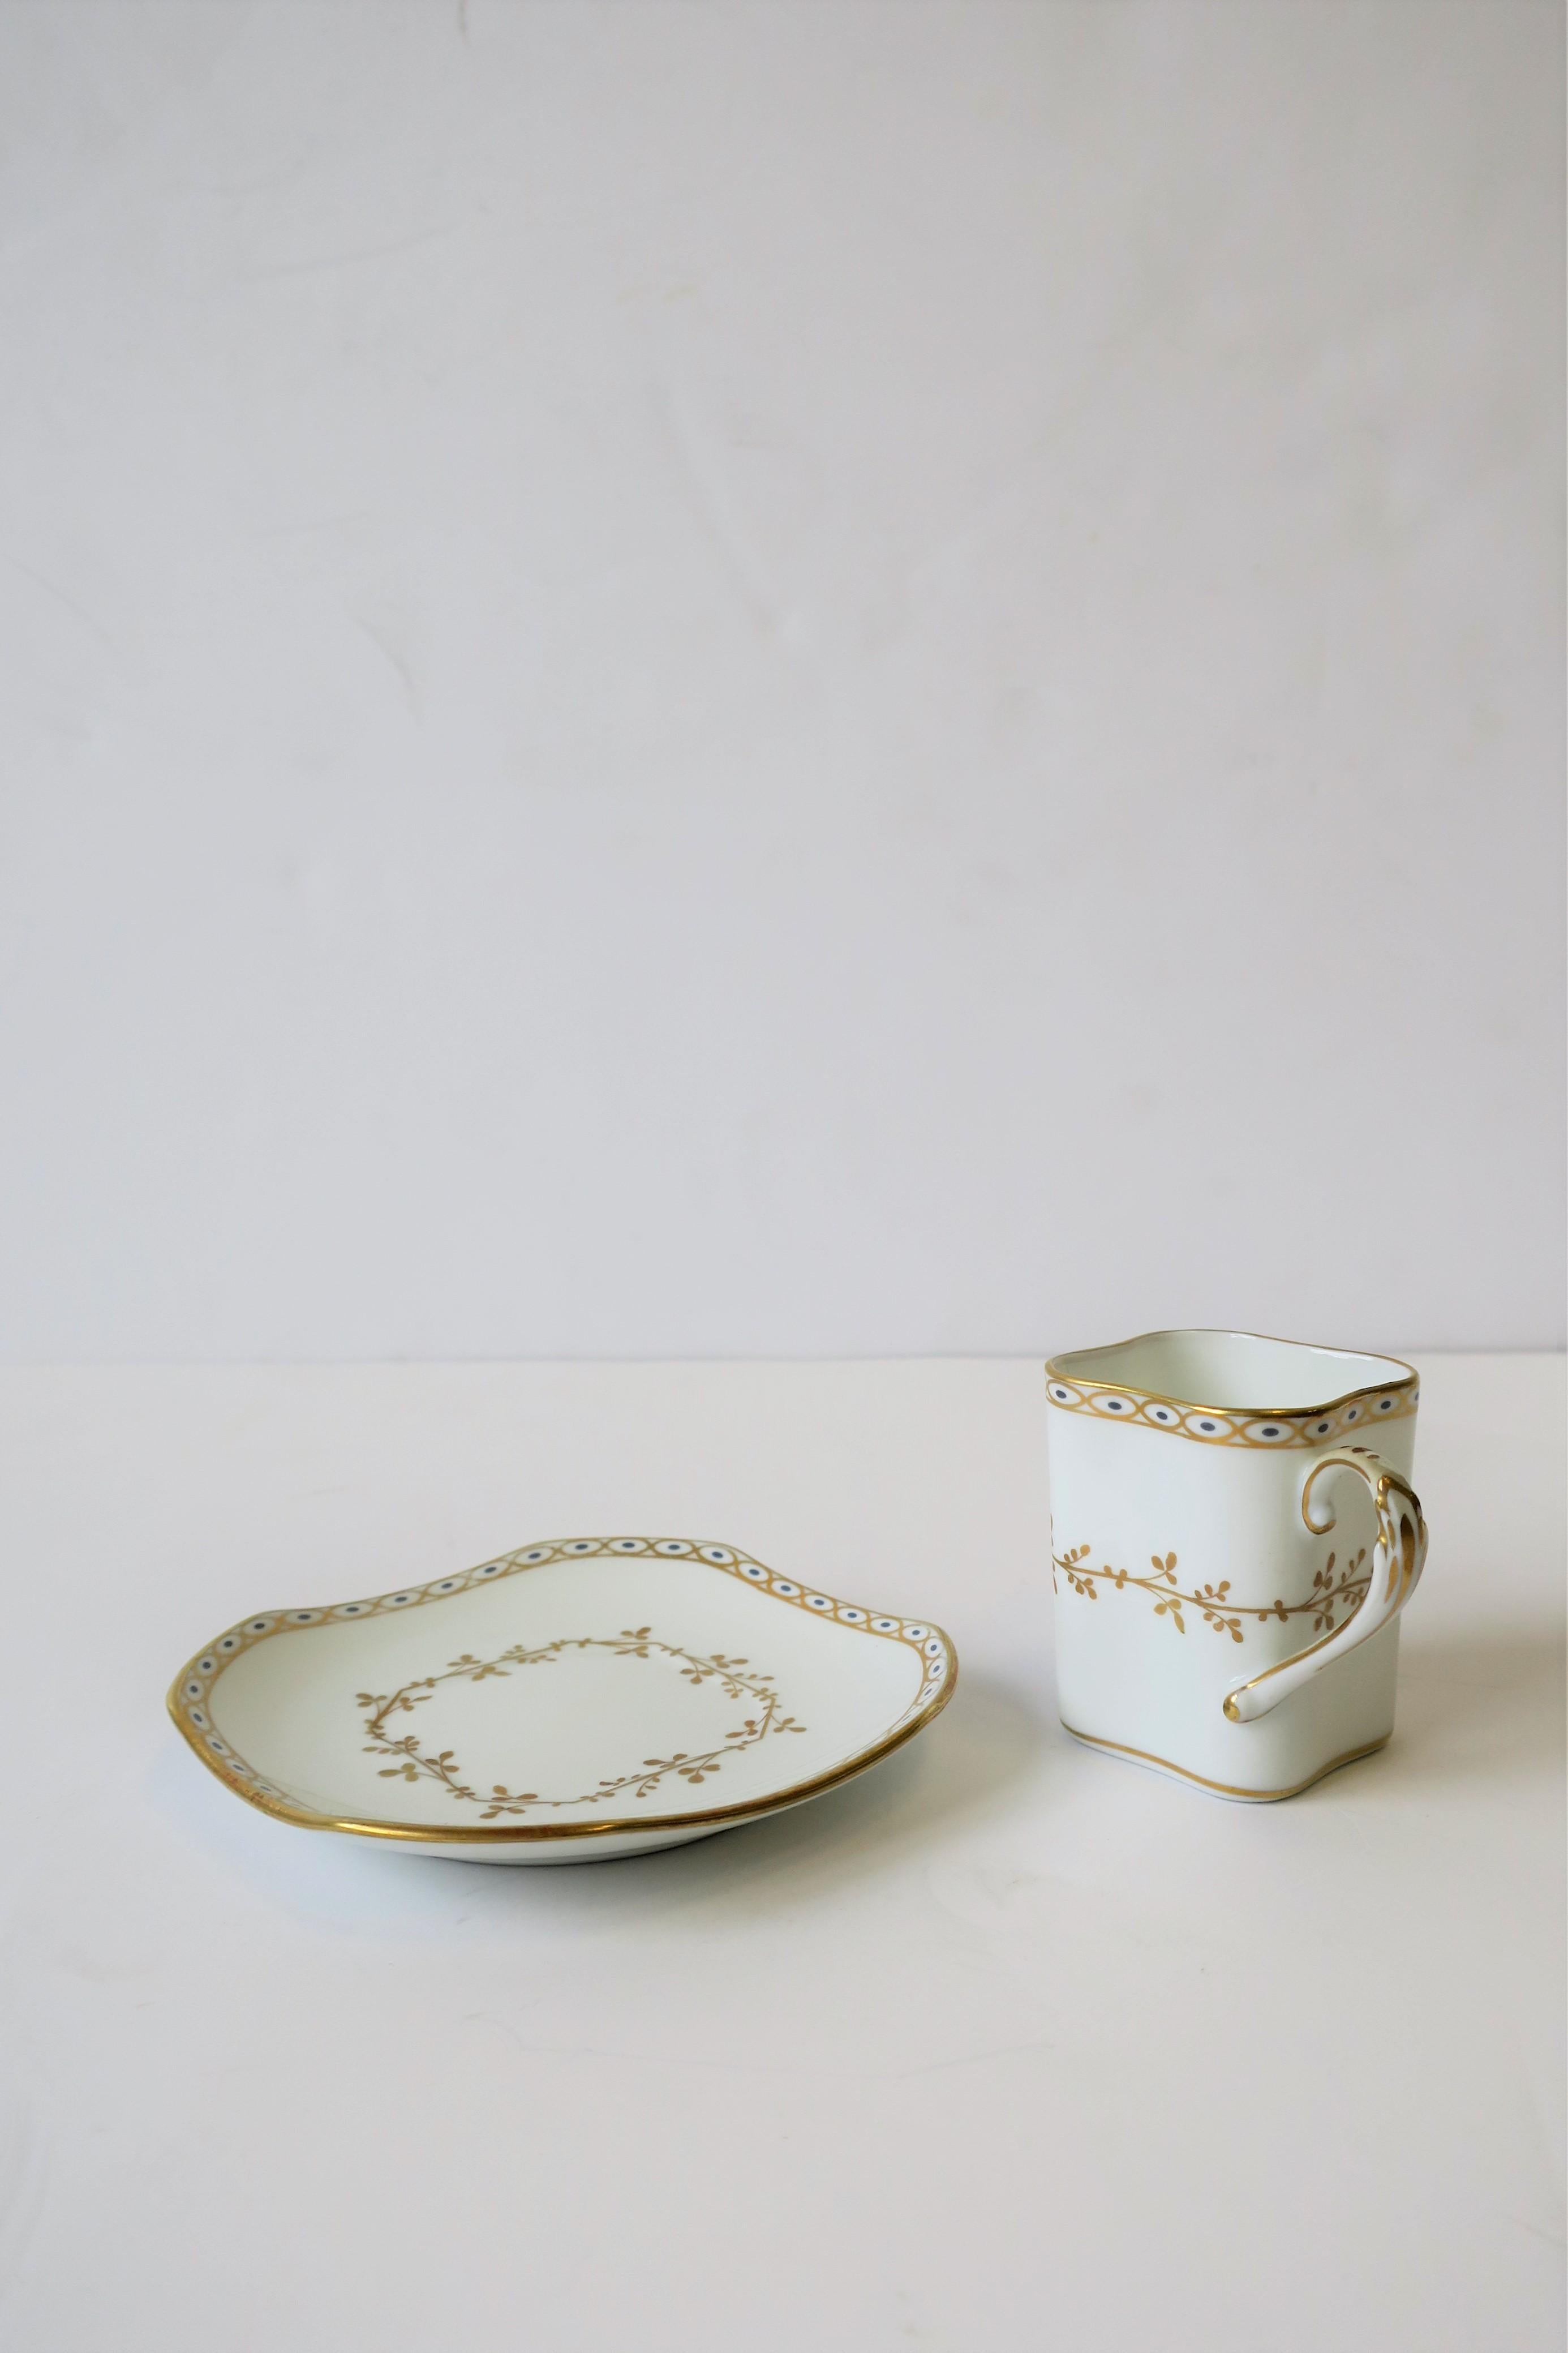 20th Century Richard Ginori Designer Italian White & Gold Espresso Coffee or Tea Cup Saucer For Sale